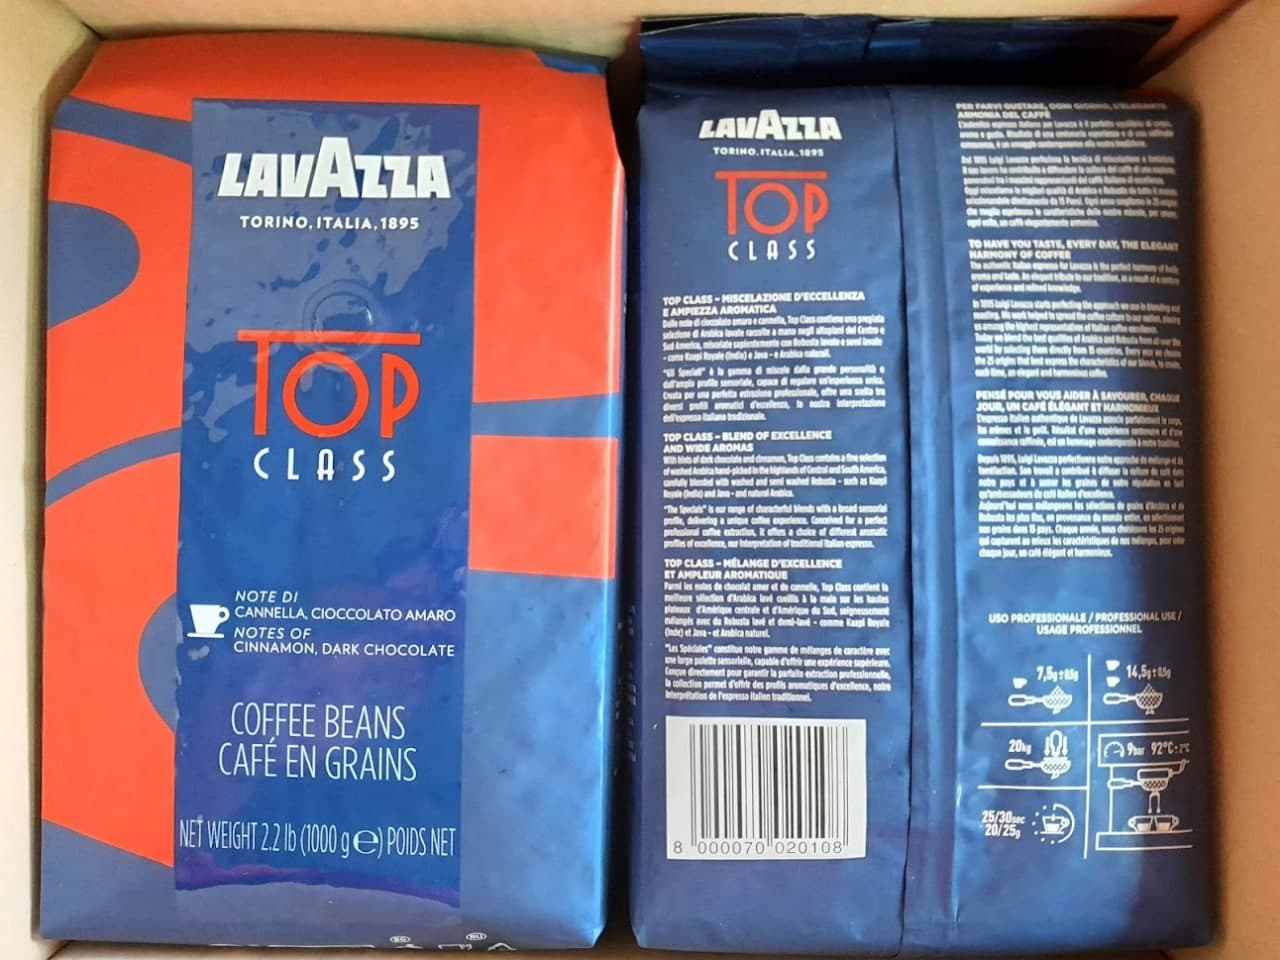 Kohvioad "LAVAZZA" Specials Collection Top Class